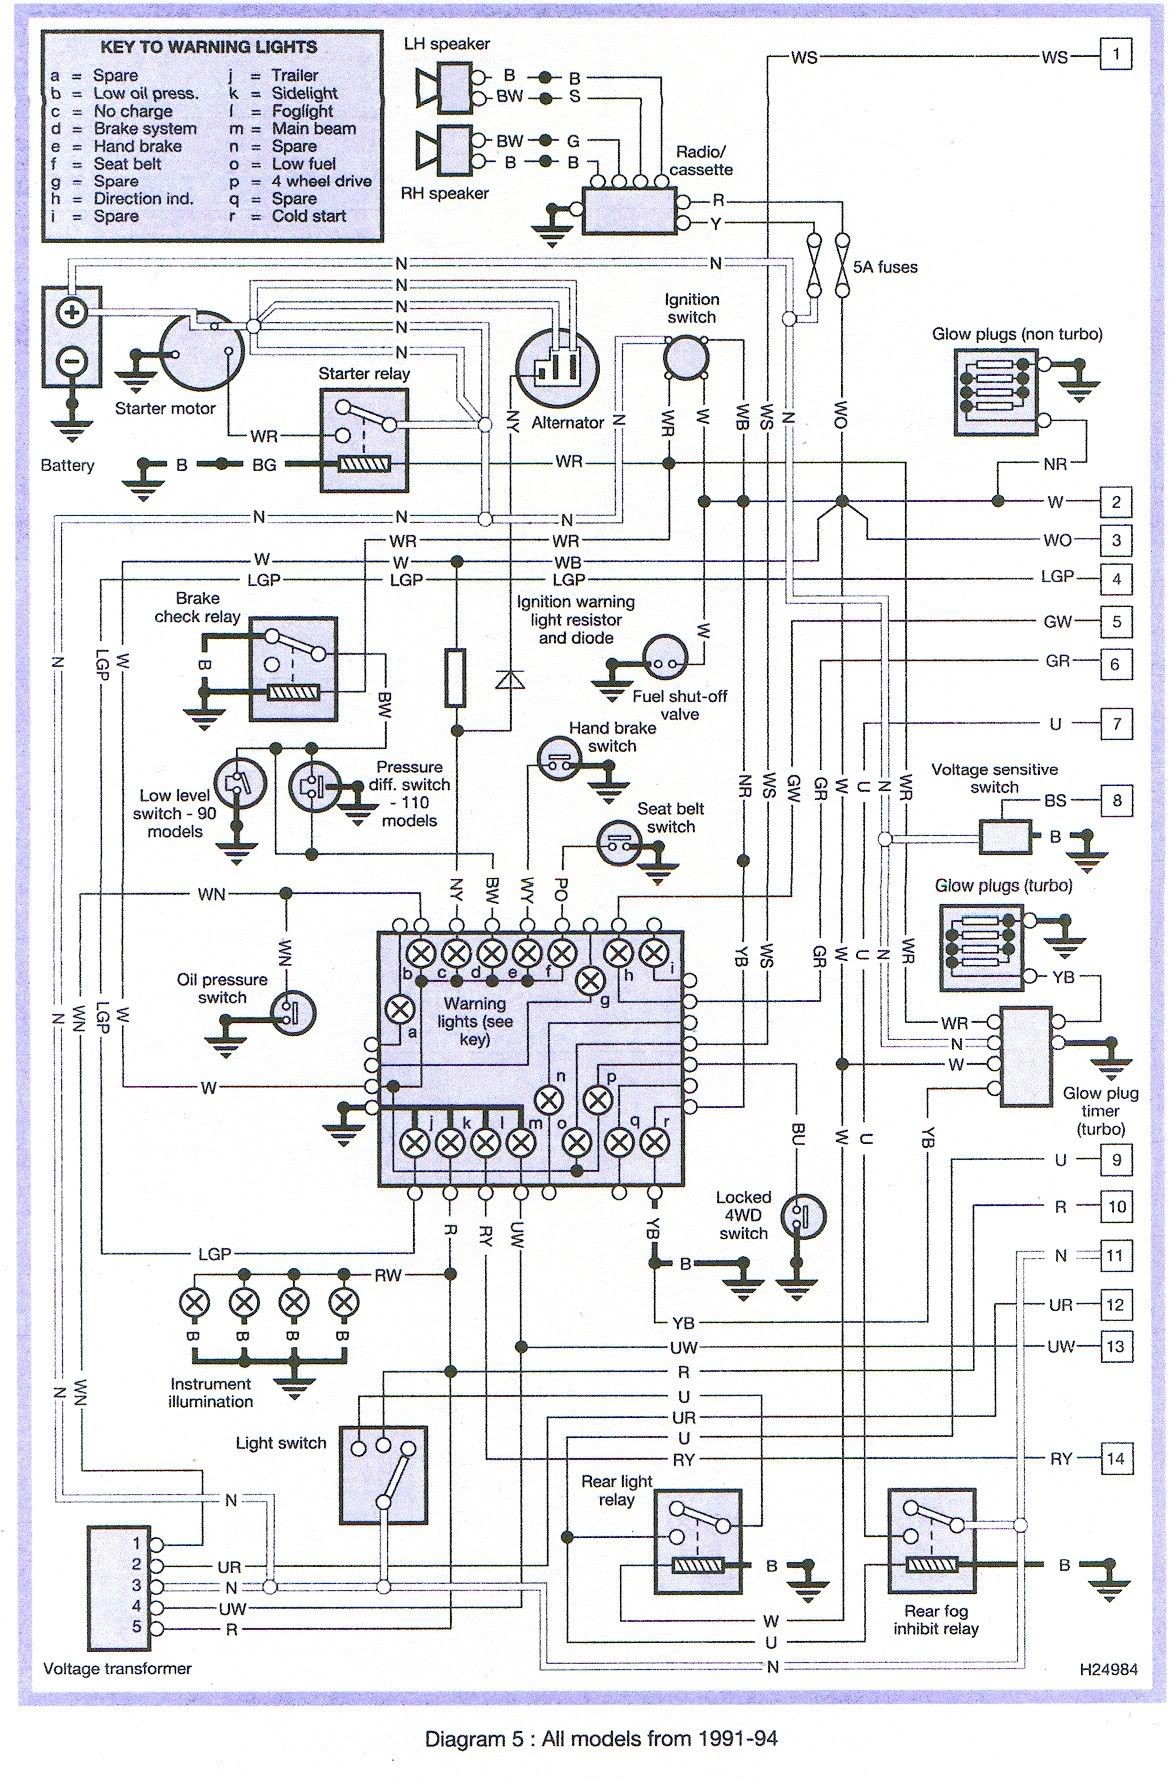 2018 Mercury 115 Prxs Ignition Switch Diagram Rover 620 Sdi Wiring Diagram Of 2018 Mercury 115 Prxs Ignition Switch Diagram